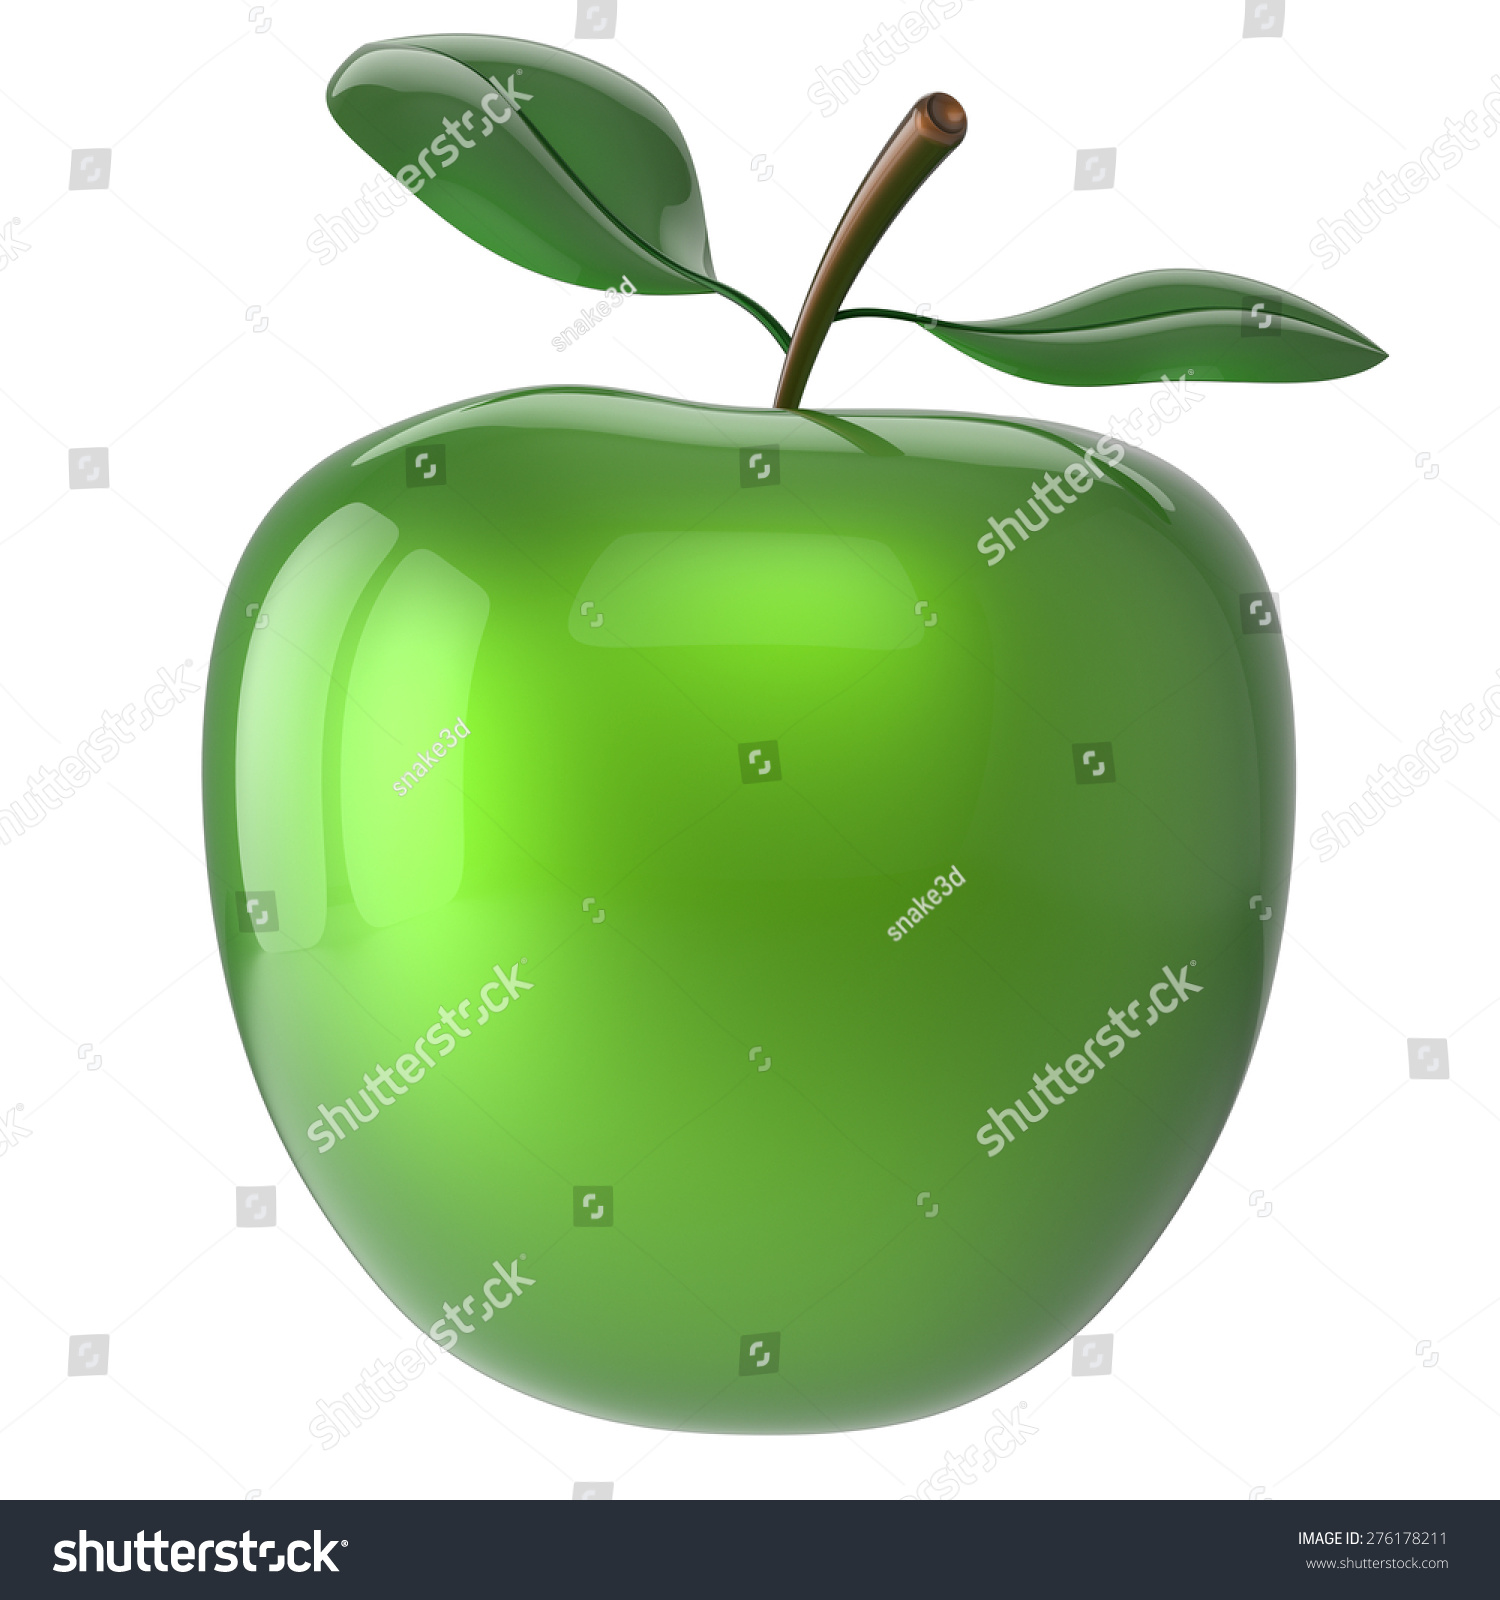 Antioxidant Activity Of Fresh Apples Eberhardt